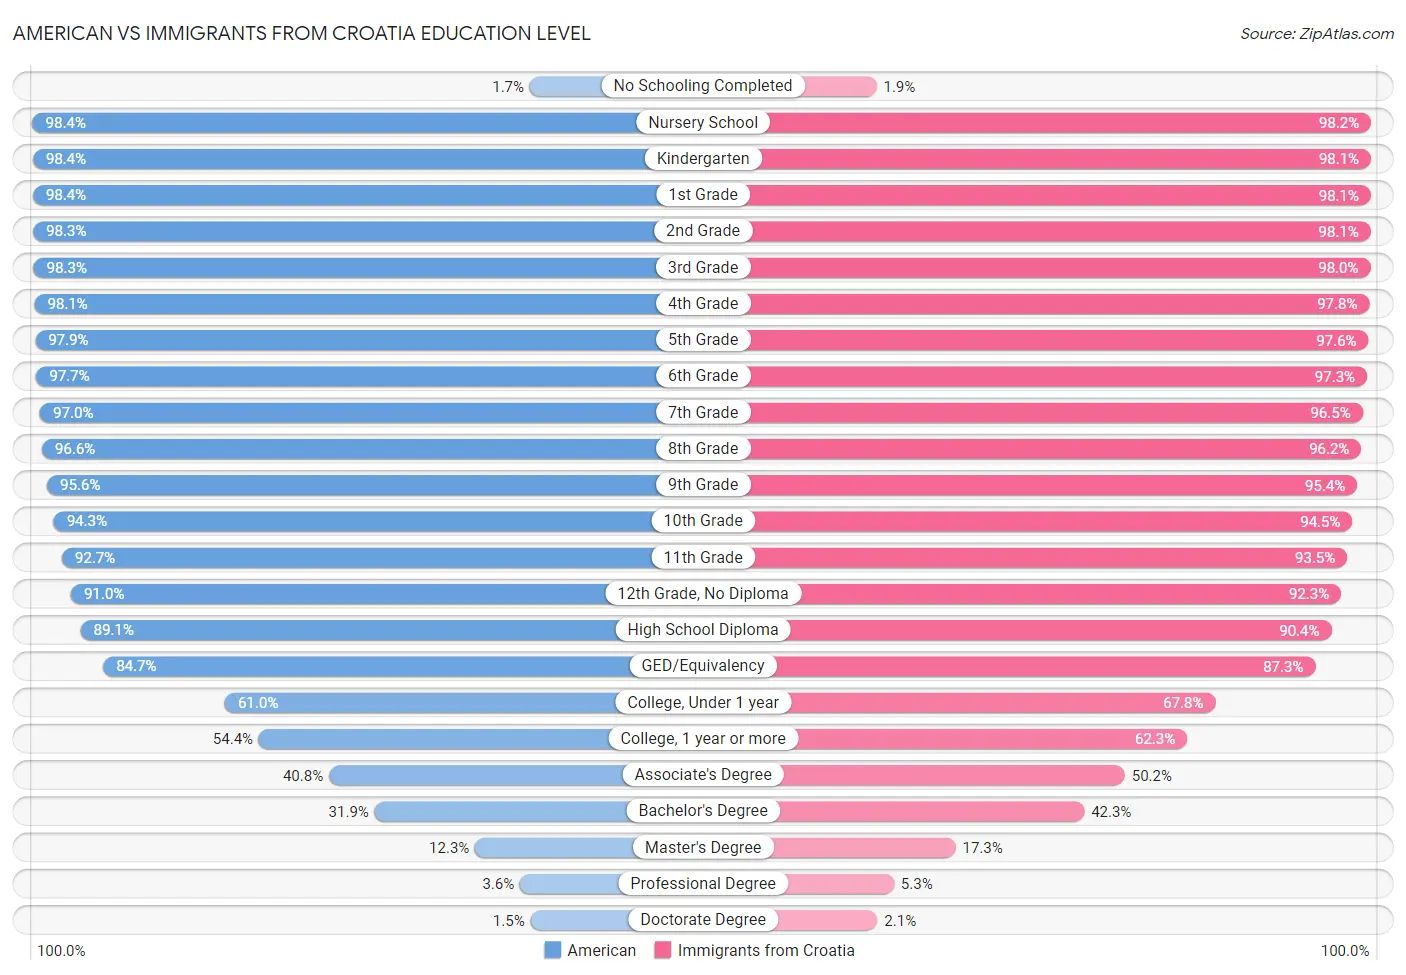 American vs Immigrants from Croatia Education Level